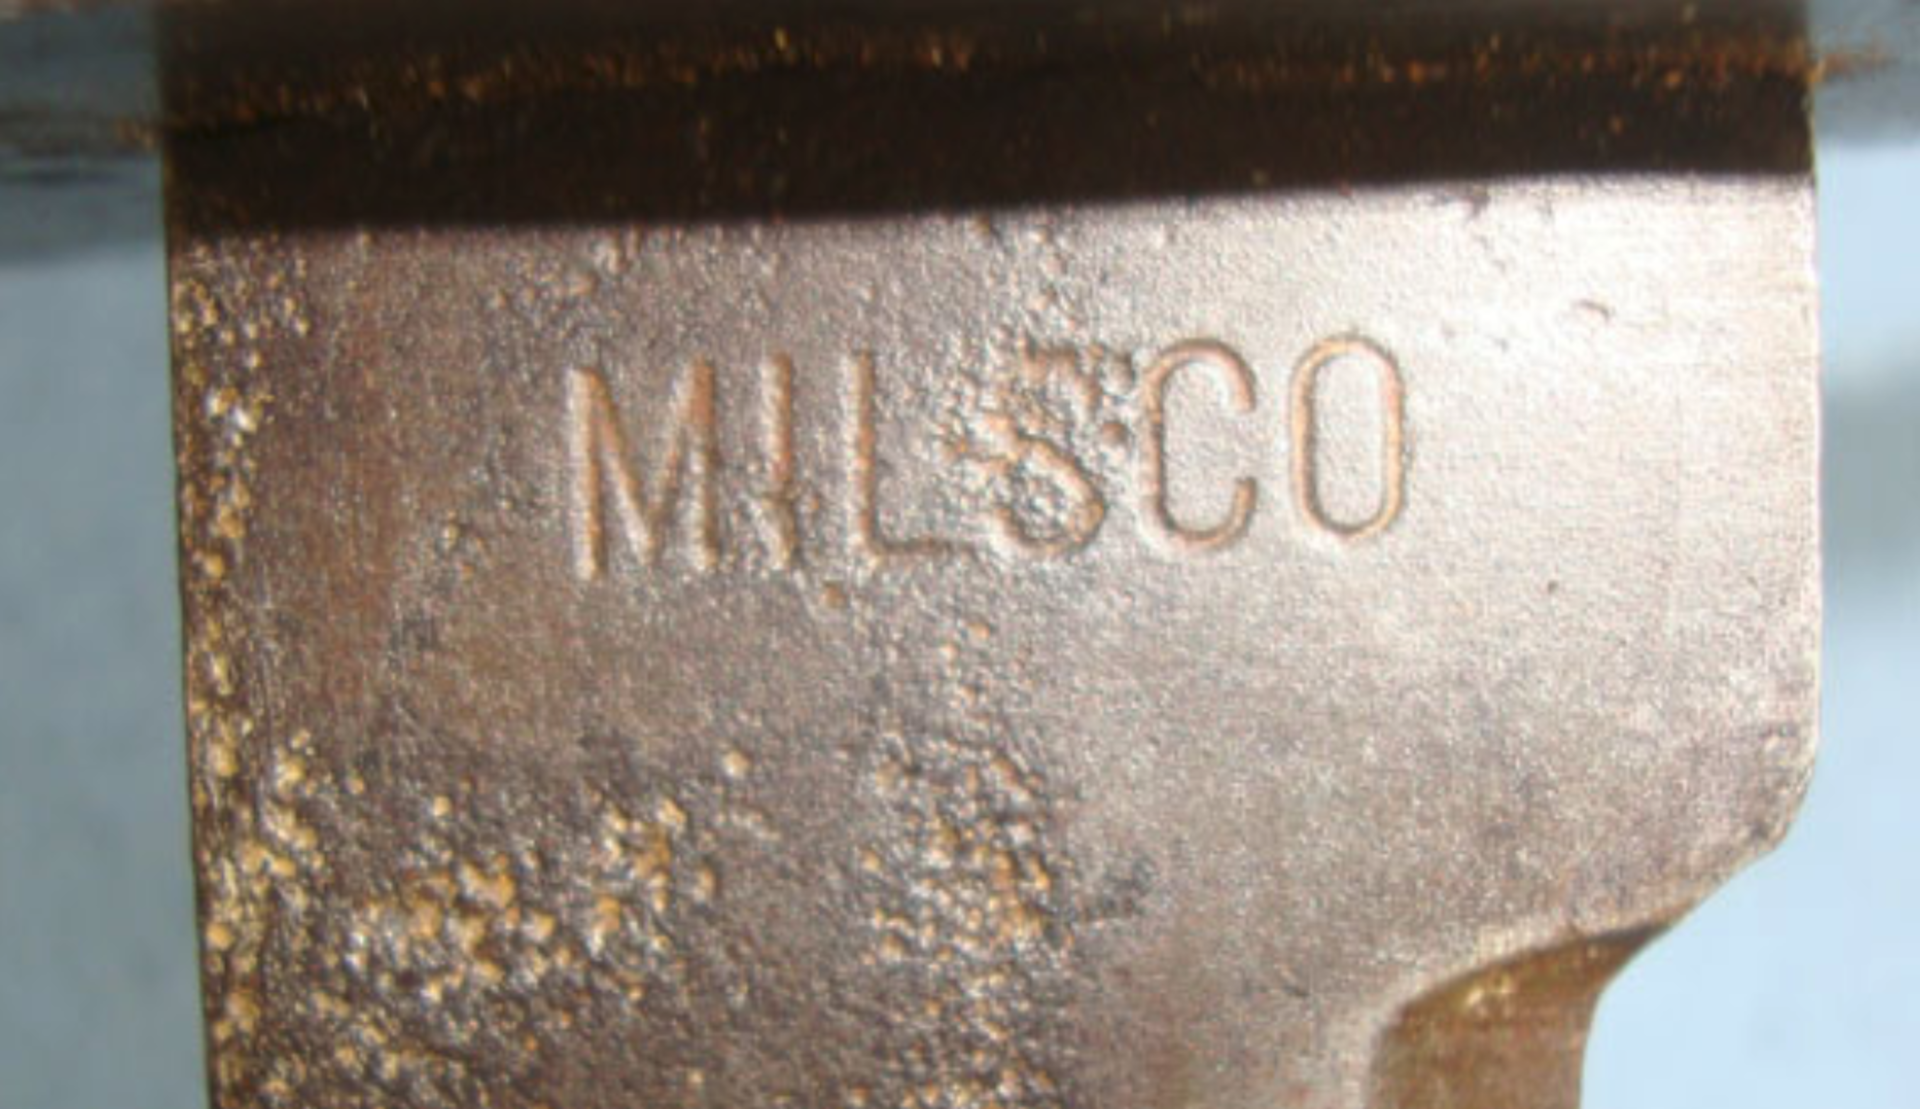 RARE, WW2 Era U.S. Manufactured Dutch Klewang M1940 Short Sword By Milsco & Leather Scabbard - Image 2 of 3